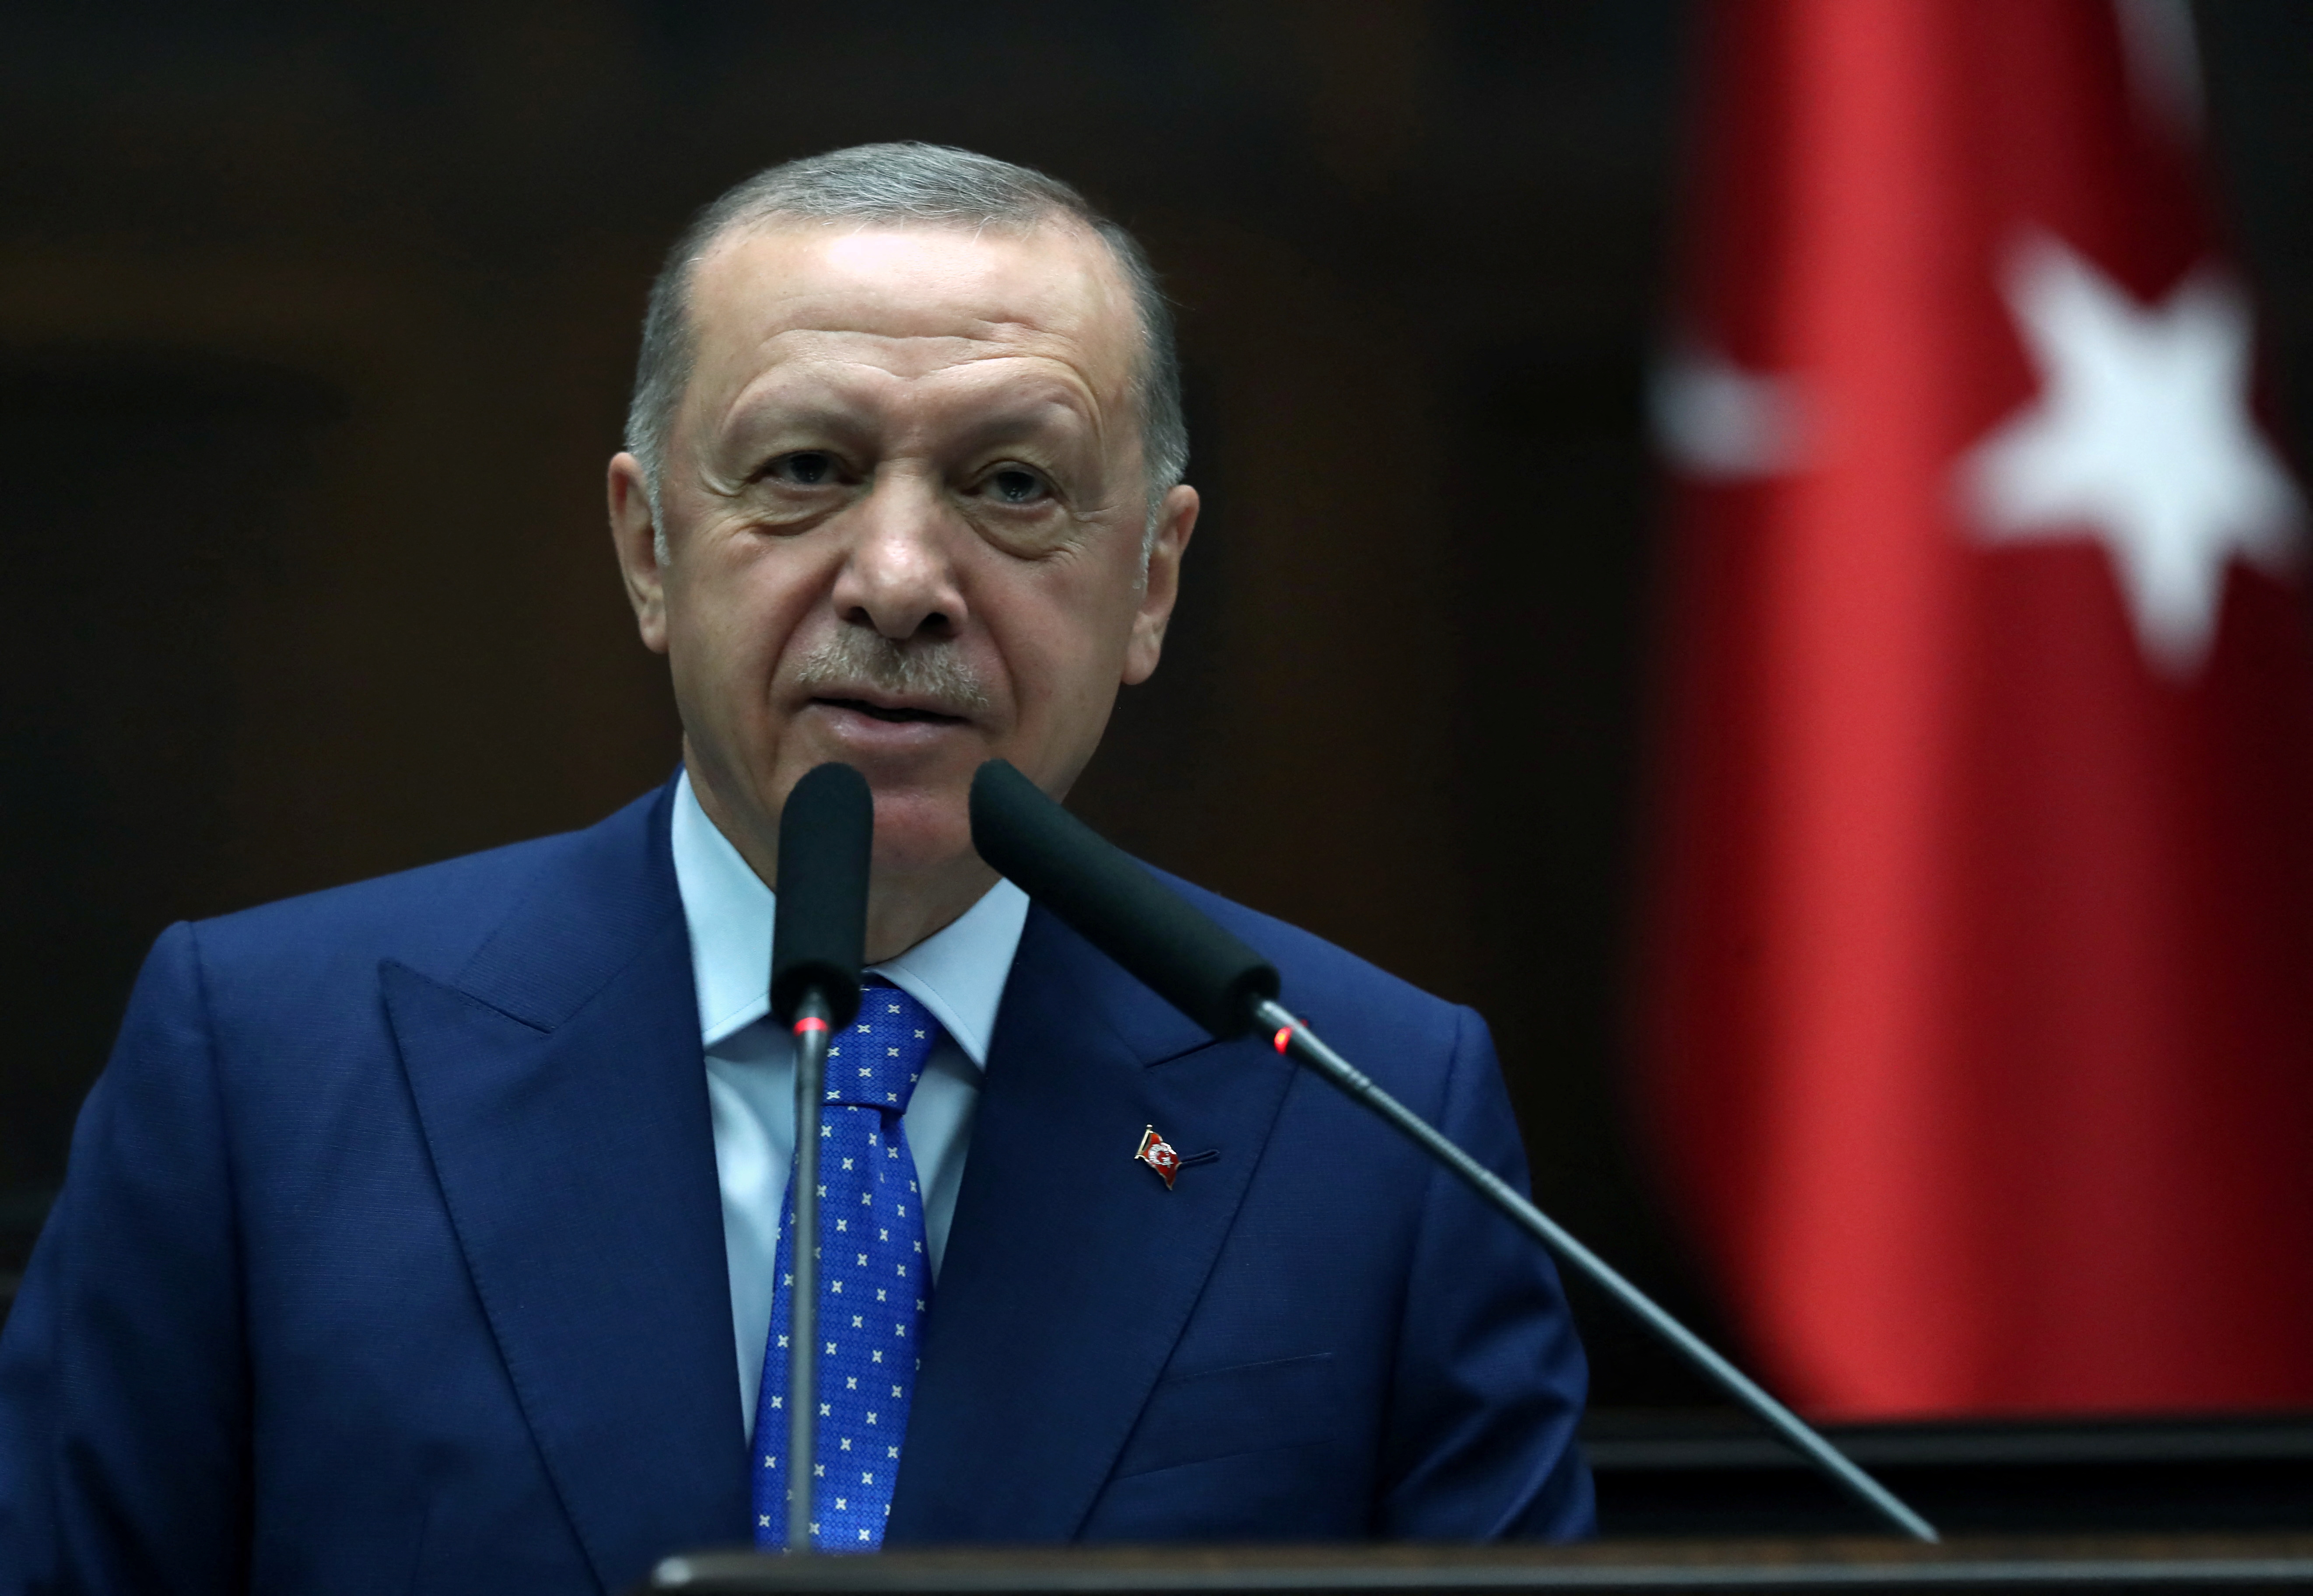 Turkish President Erdogan addresses members of AKP during a meeting at the parliament in Ankara